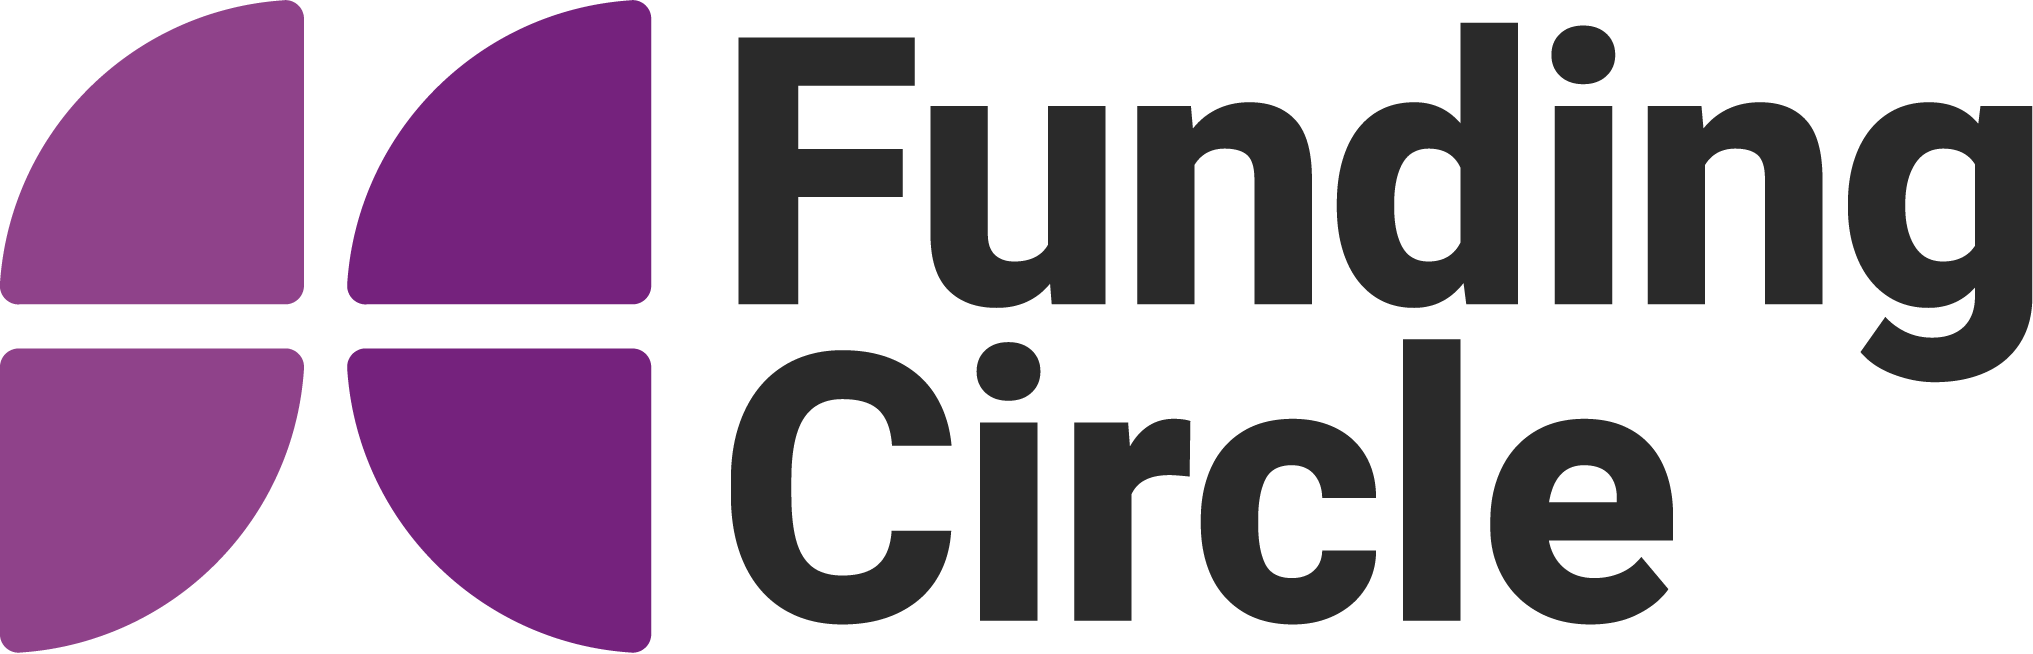 Funding Circle Erfahrungen